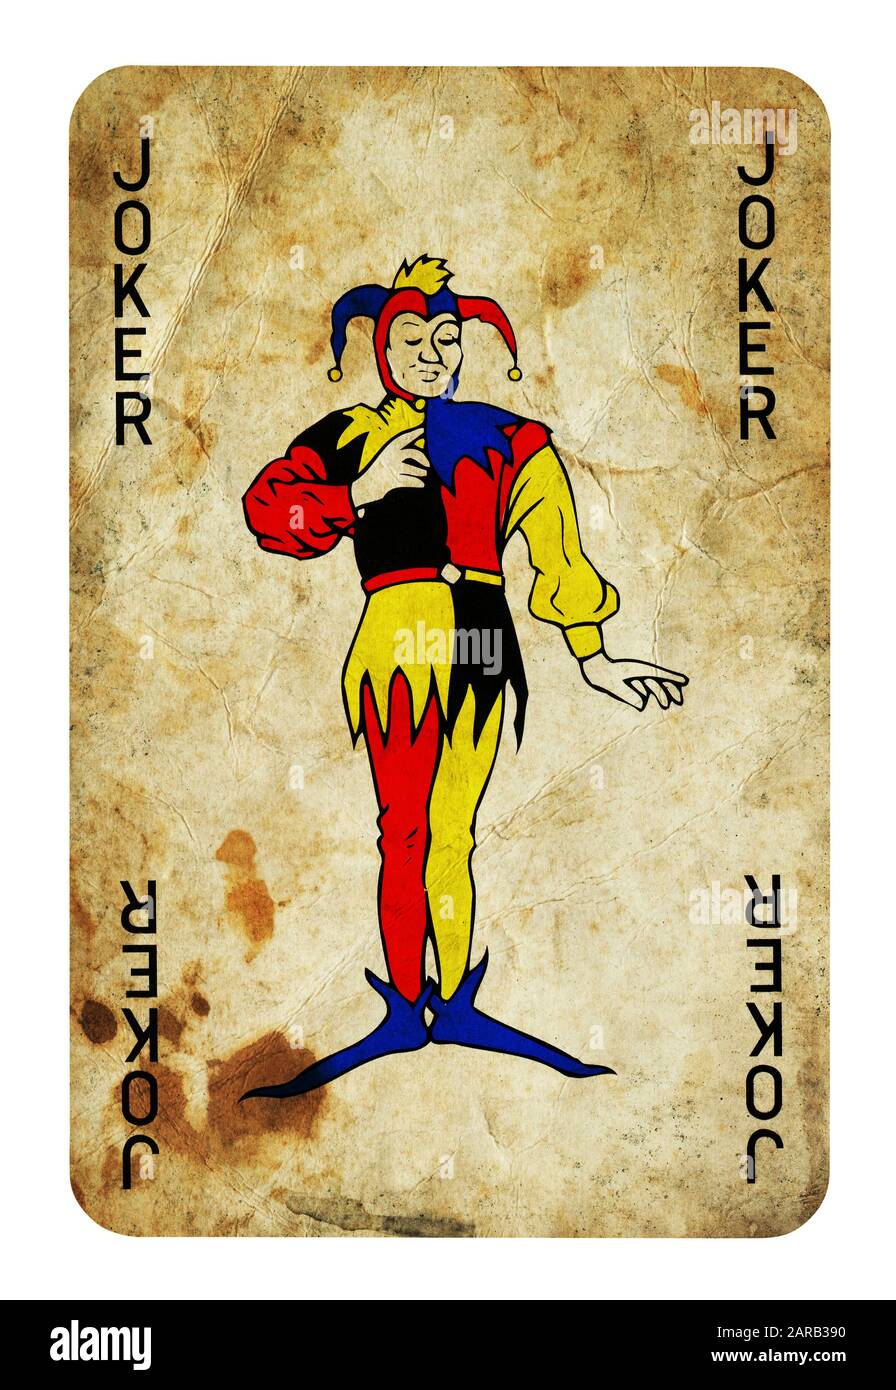 Vintage Joker Card